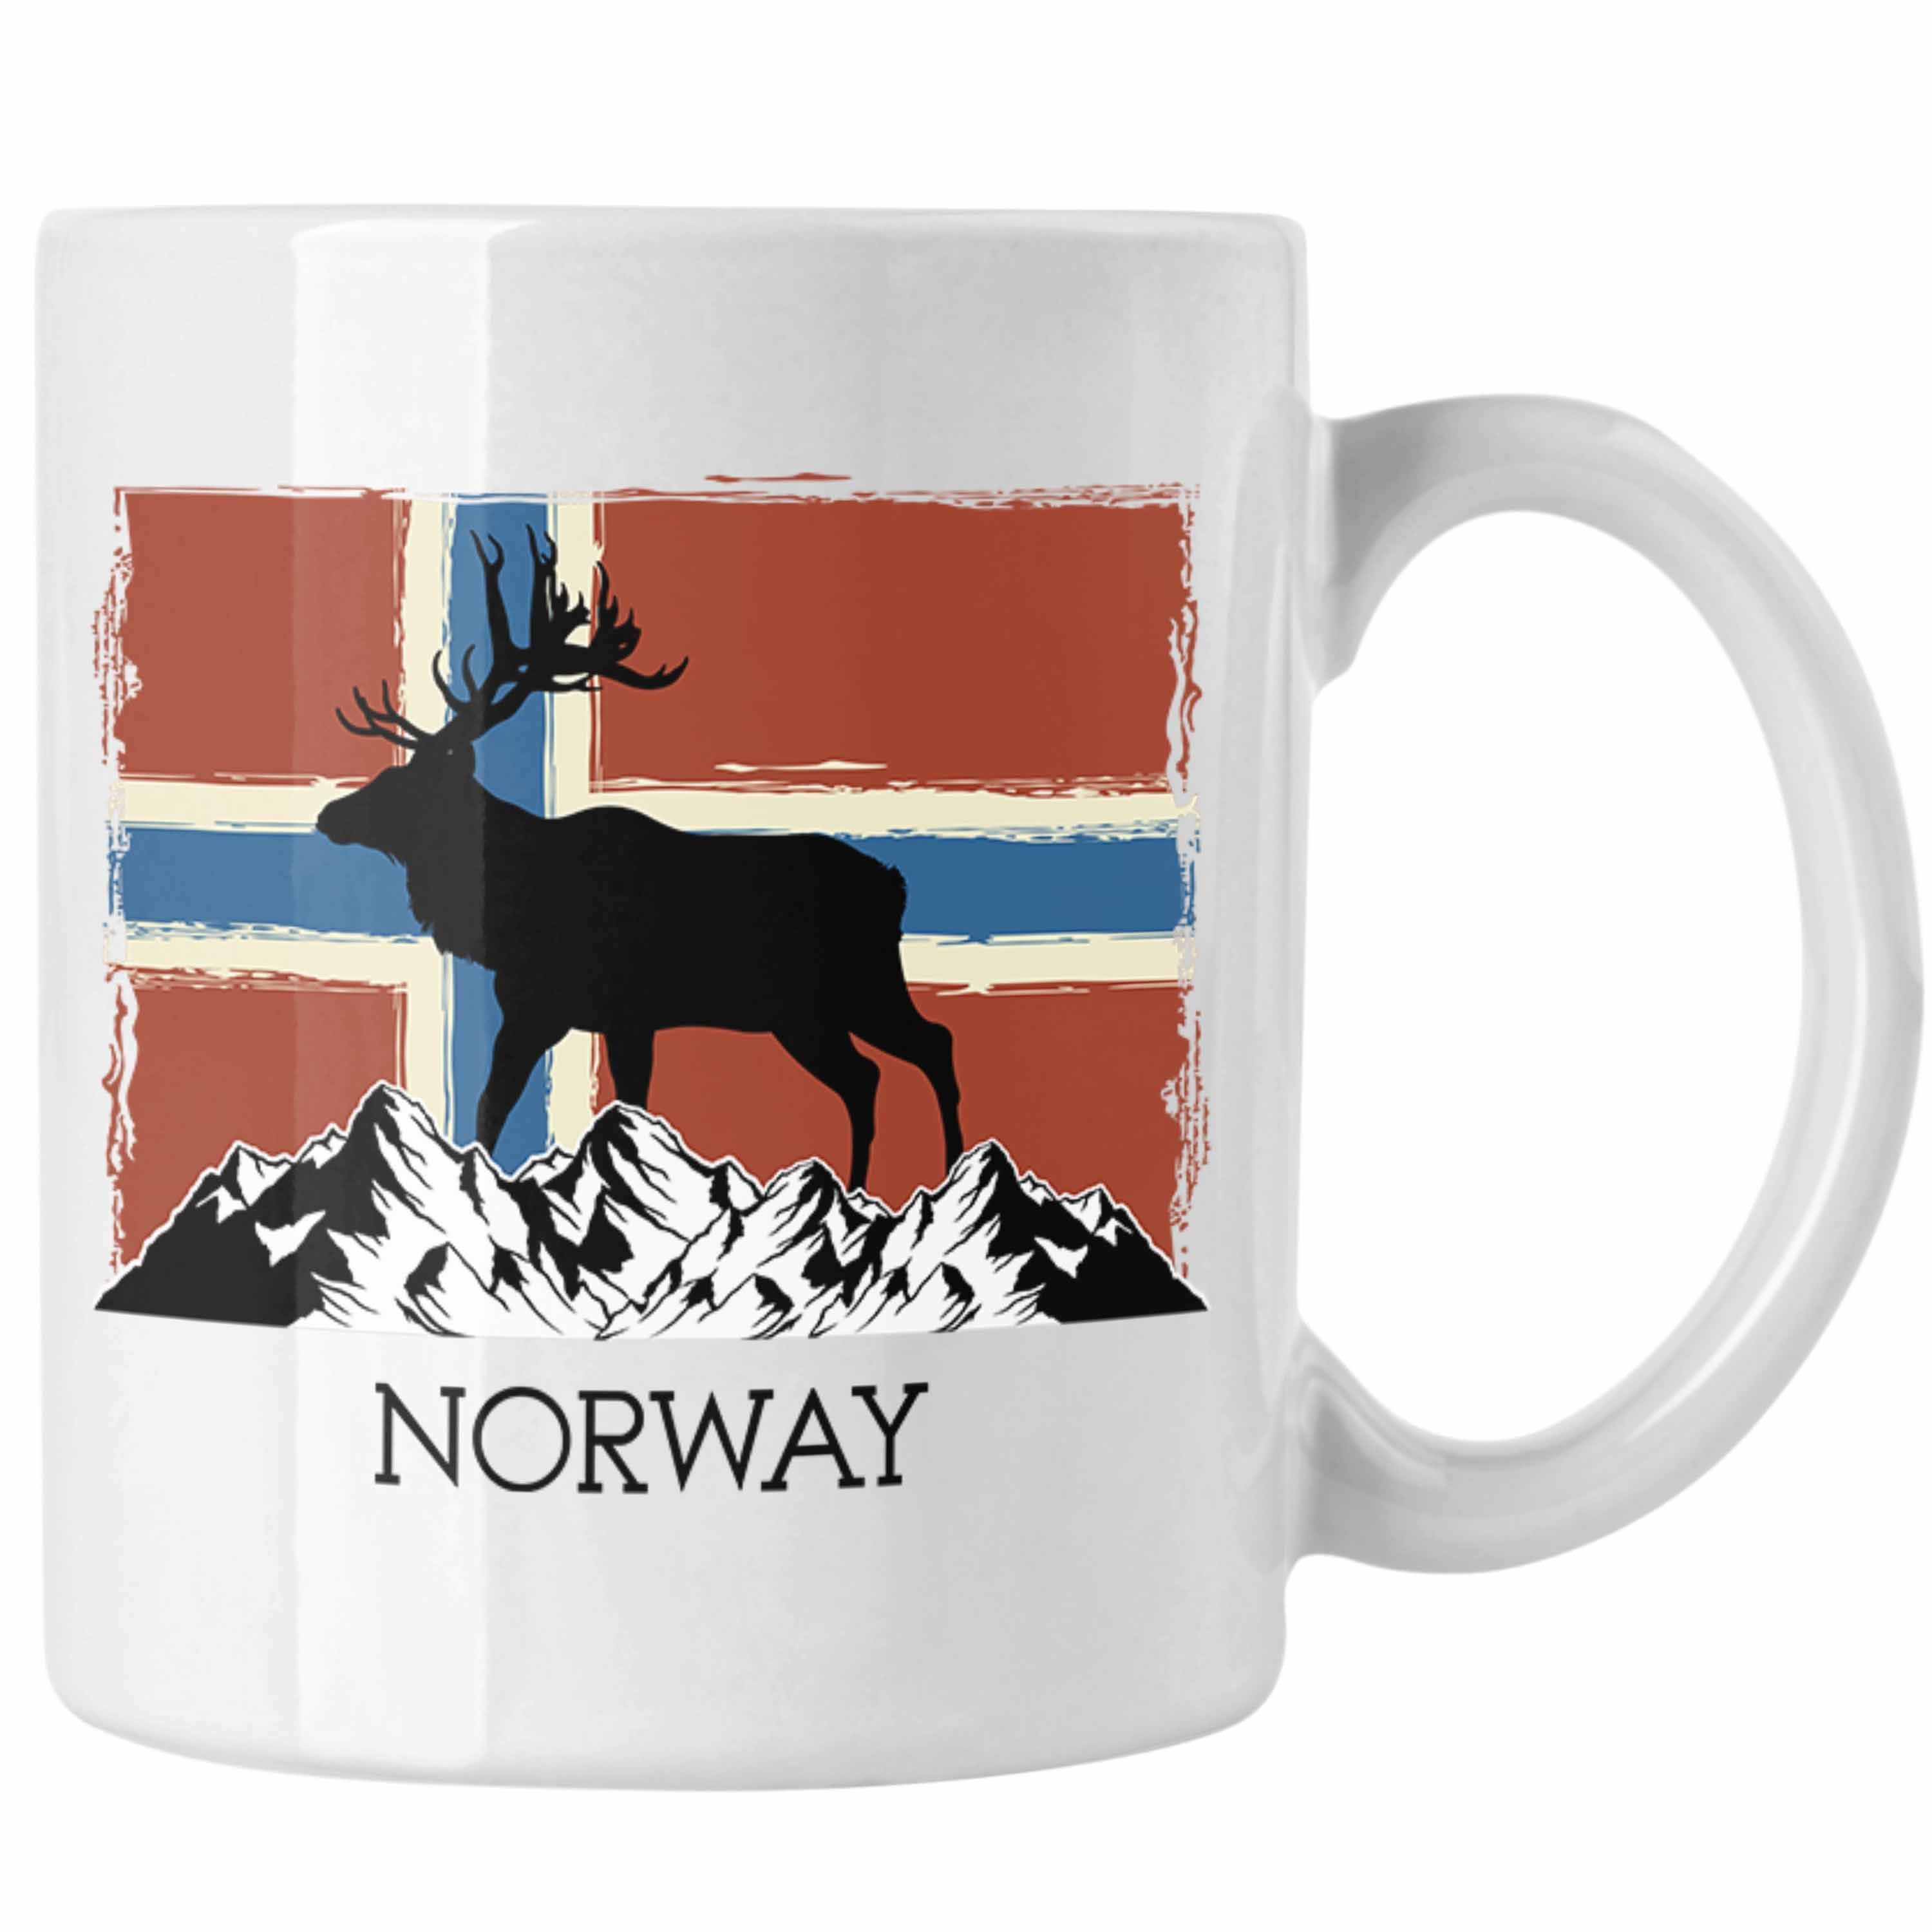 Norway Geschenke Weiss - Nordkap Trendation Tasse Flagge Elch Trendation Norwegen Tasse